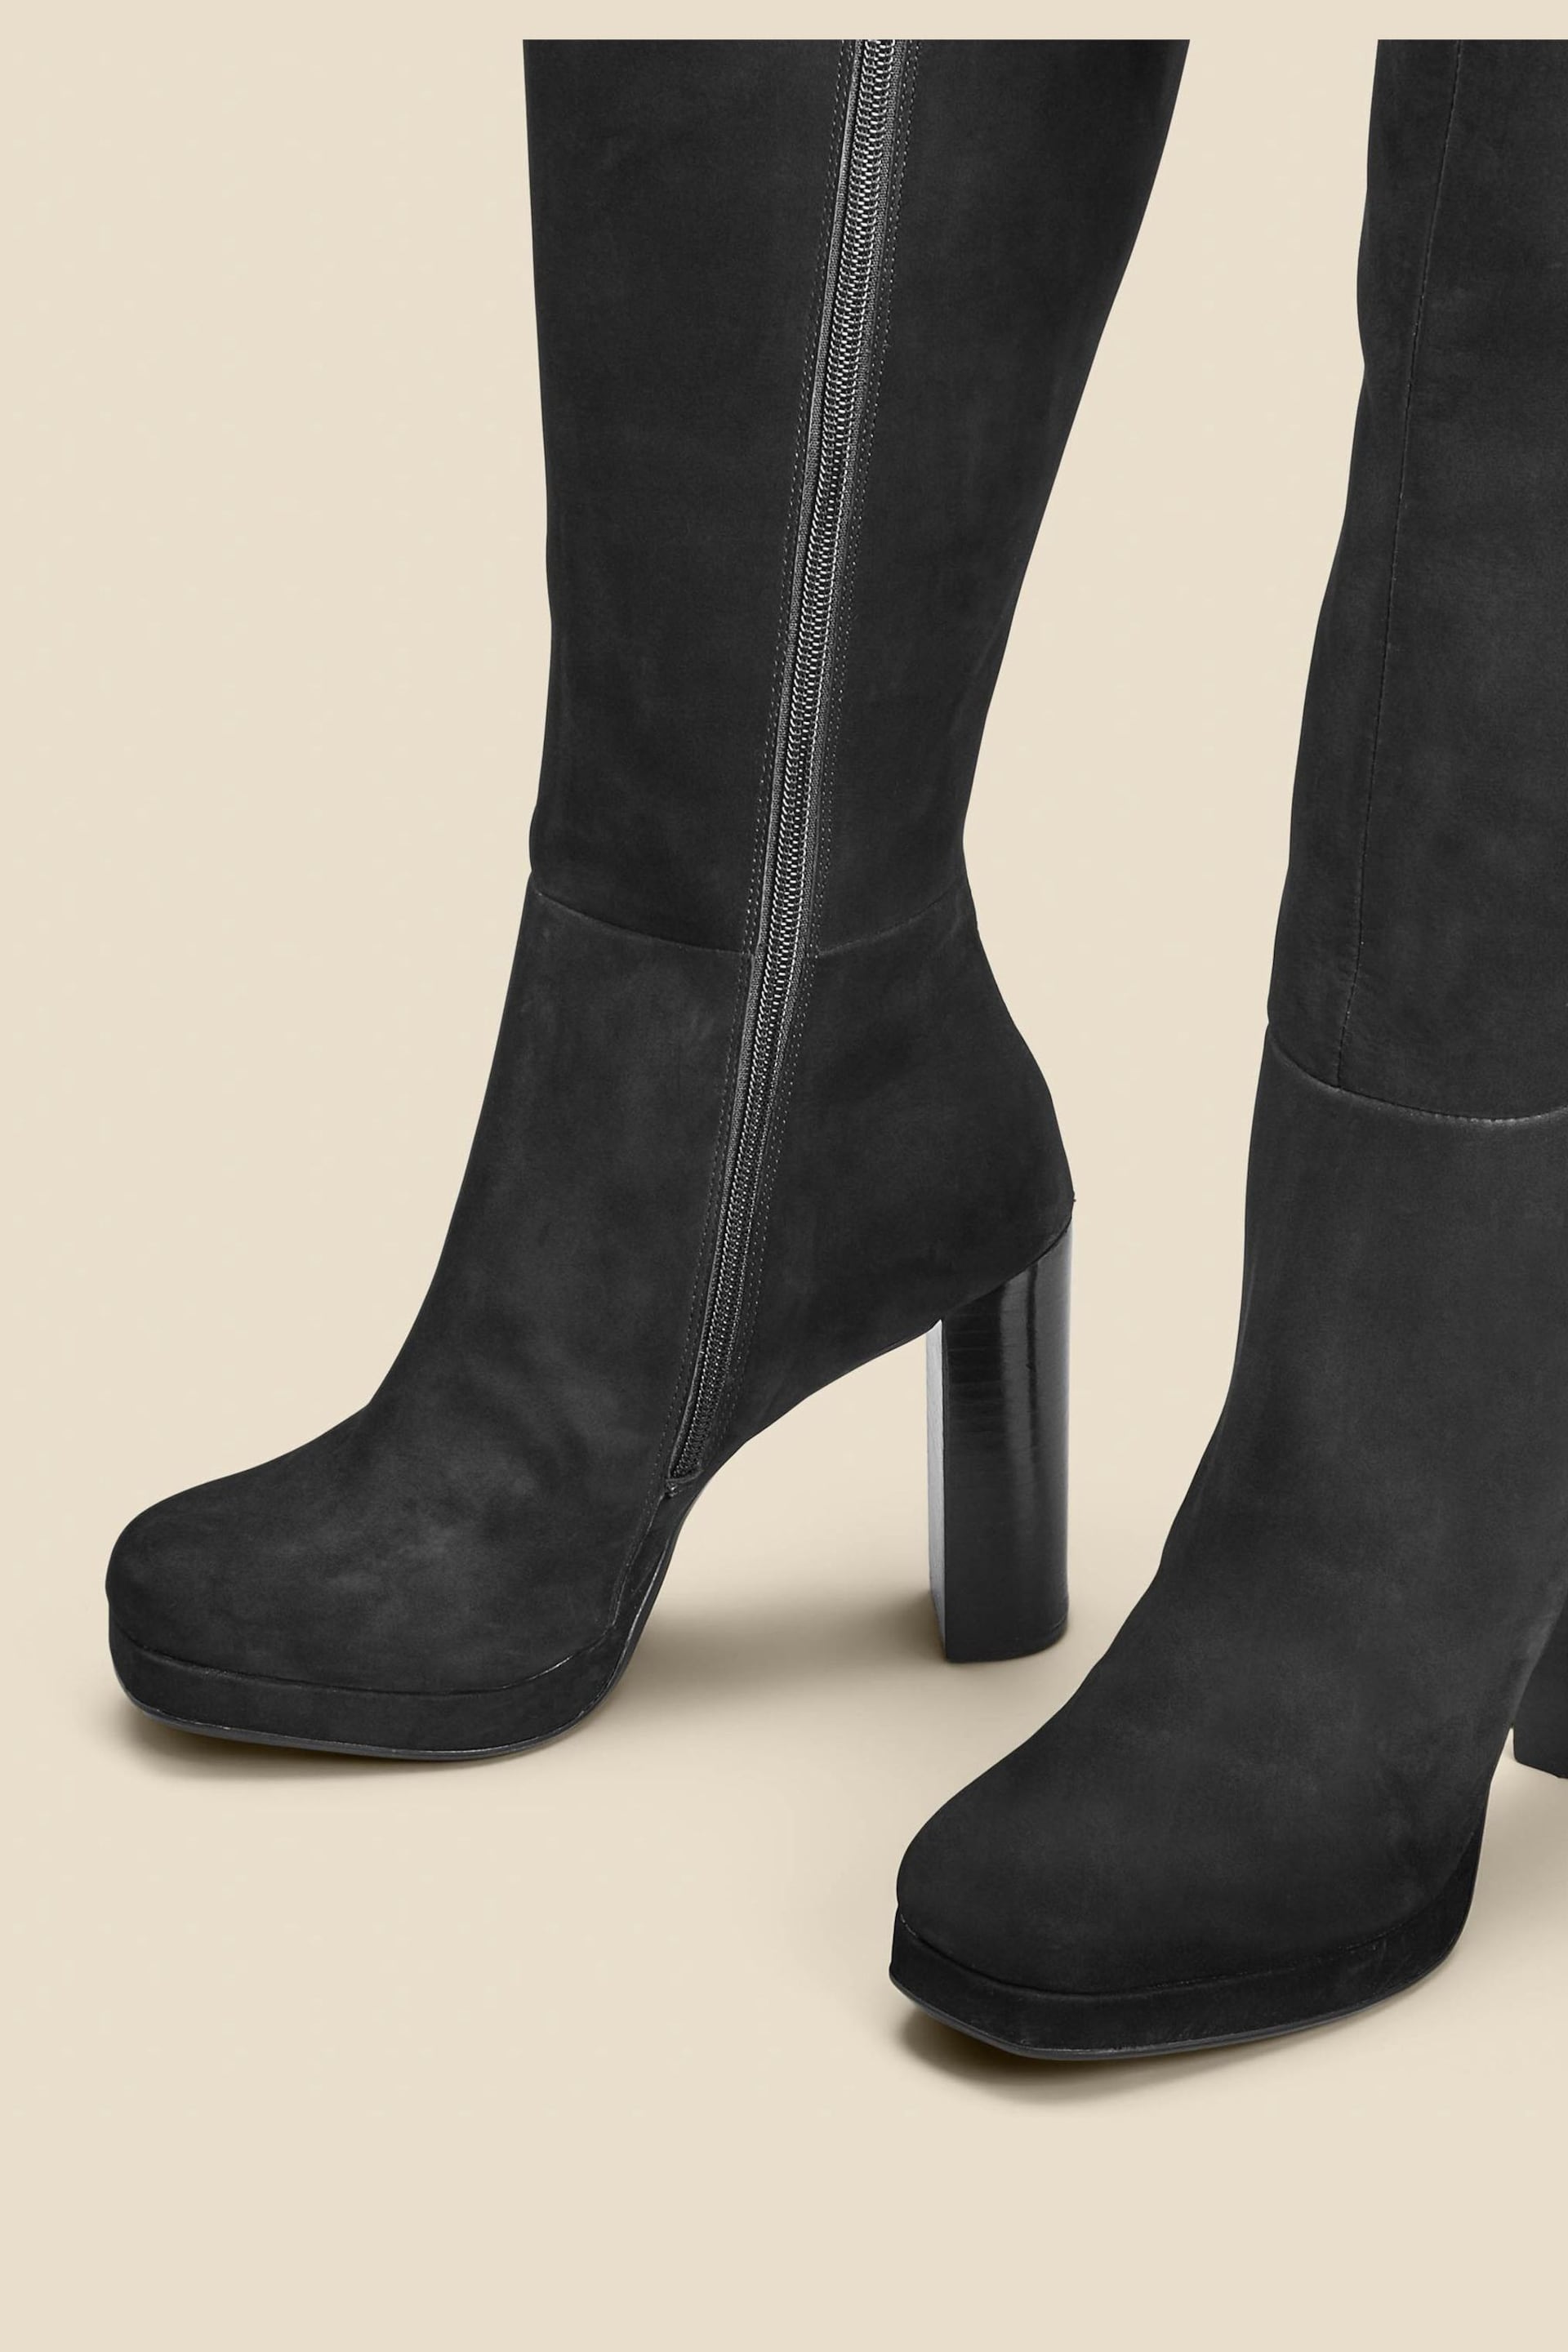 Sosandar Black Nubuck Leather Platform Block Heel Knee High Boots - Image 3 of 4